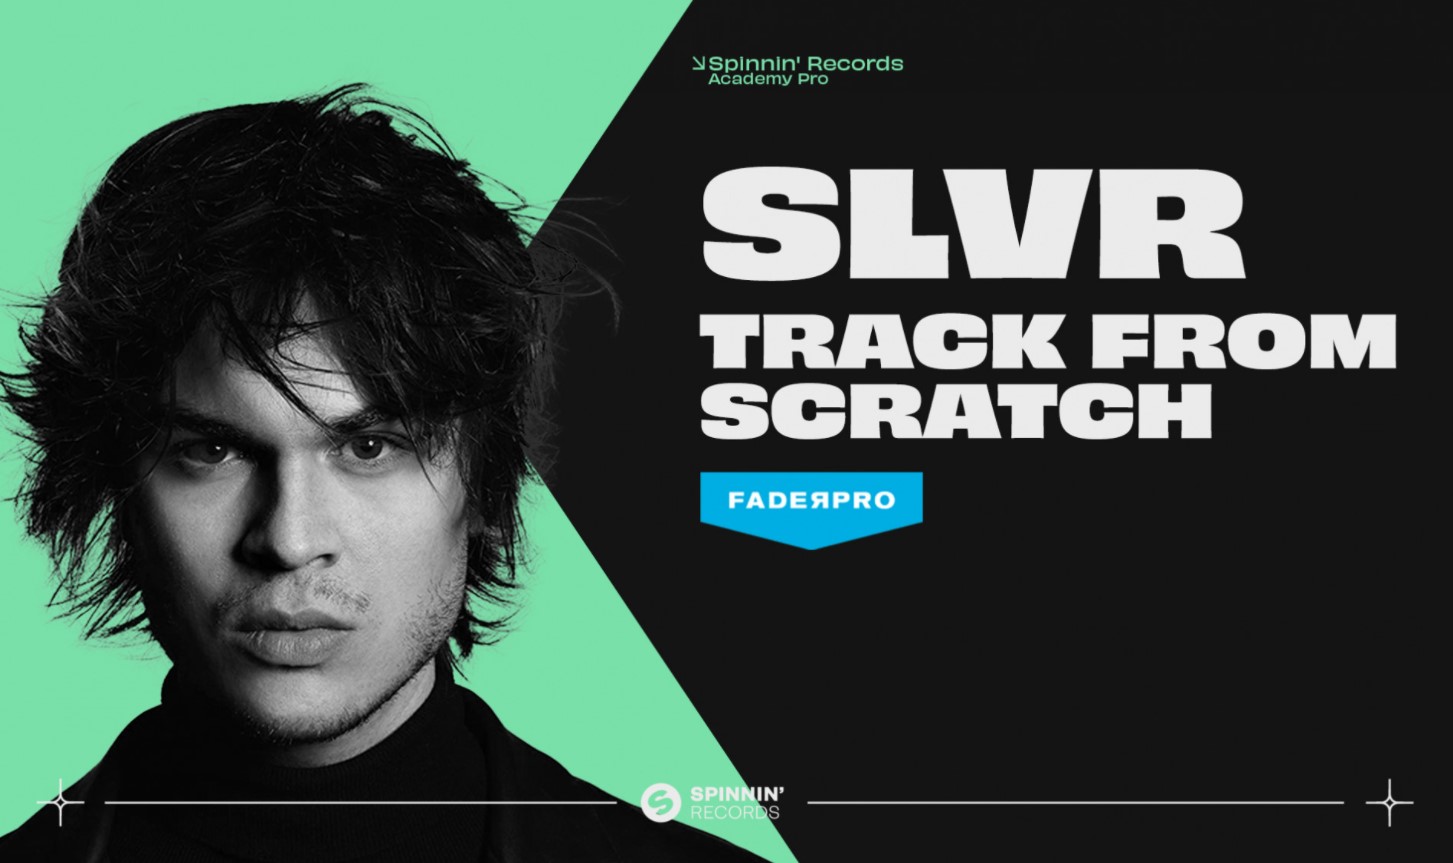 FaderPro SLVR Track from Scratch [TUTORiAL]